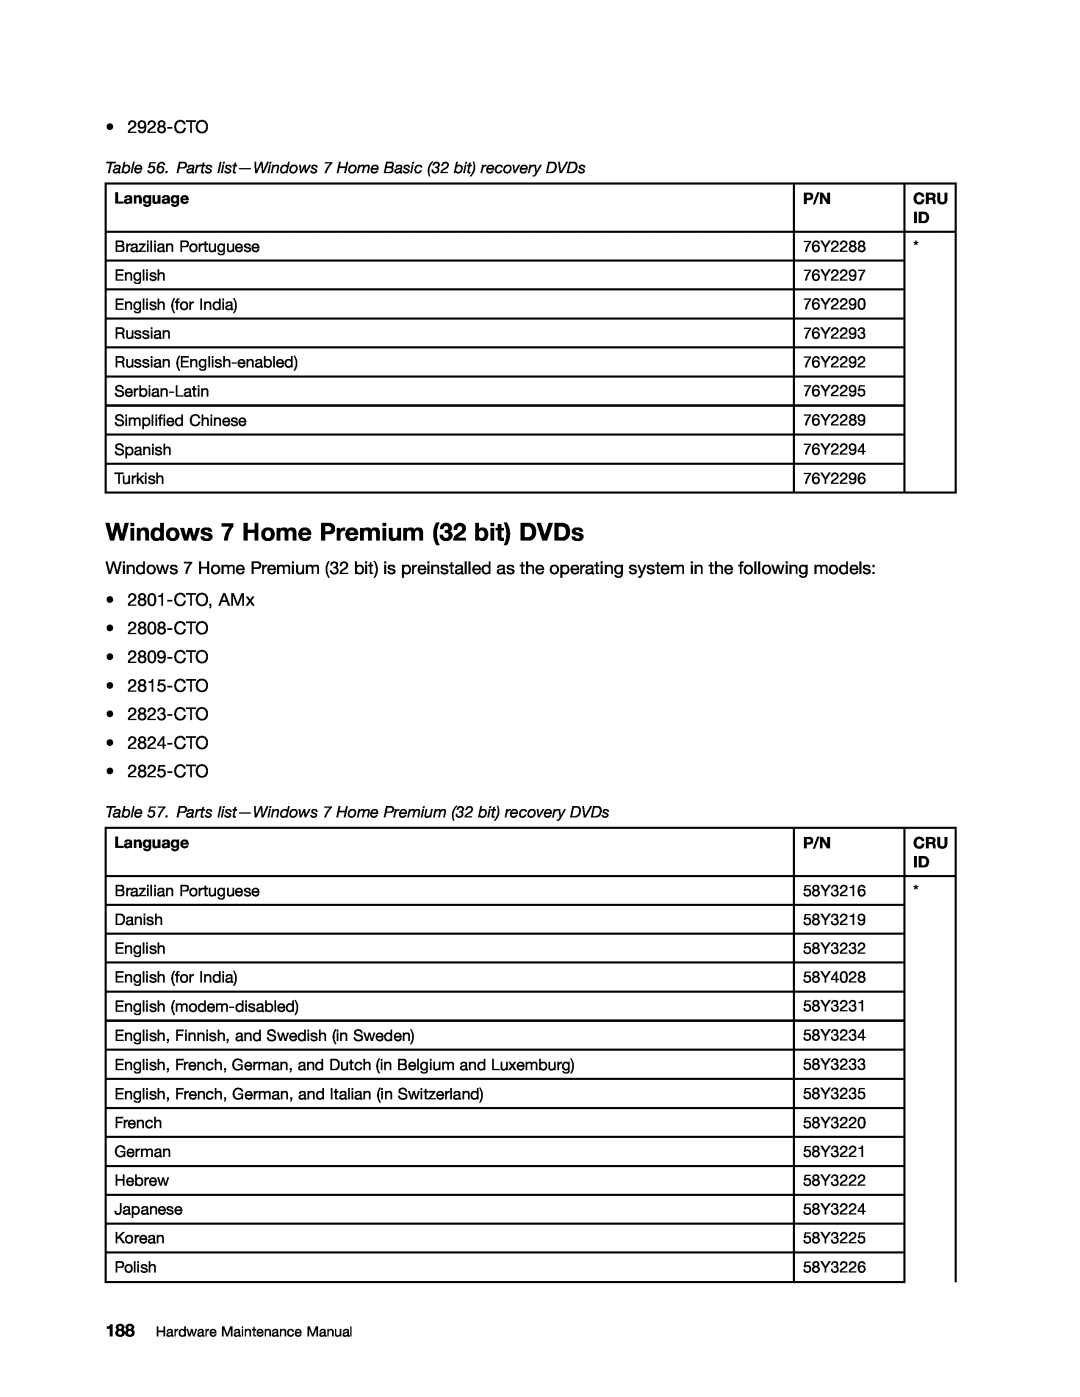 IBM T410SI, T400S manual Windows 7 Home Premium 32 bit DVDs, 2928-CTO, Parts list-Windows 7 Home Basic 32 bit recovery DVDs 